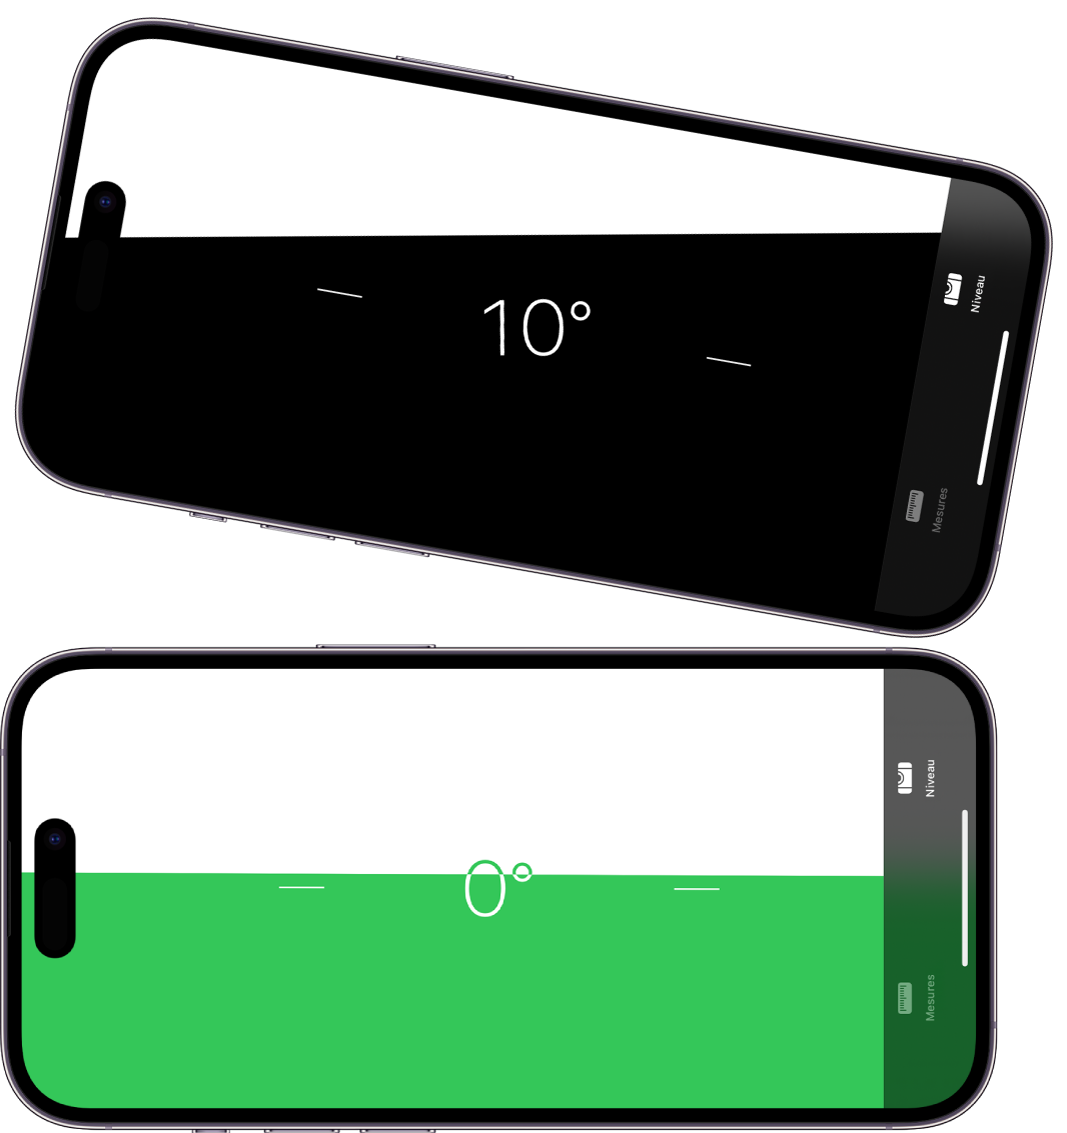 L’écran de niveau dans l’app Mesures. En haut, l’iPhone est incliné à un angle de dix degrés. En bas, l’iPhone est de niveau.